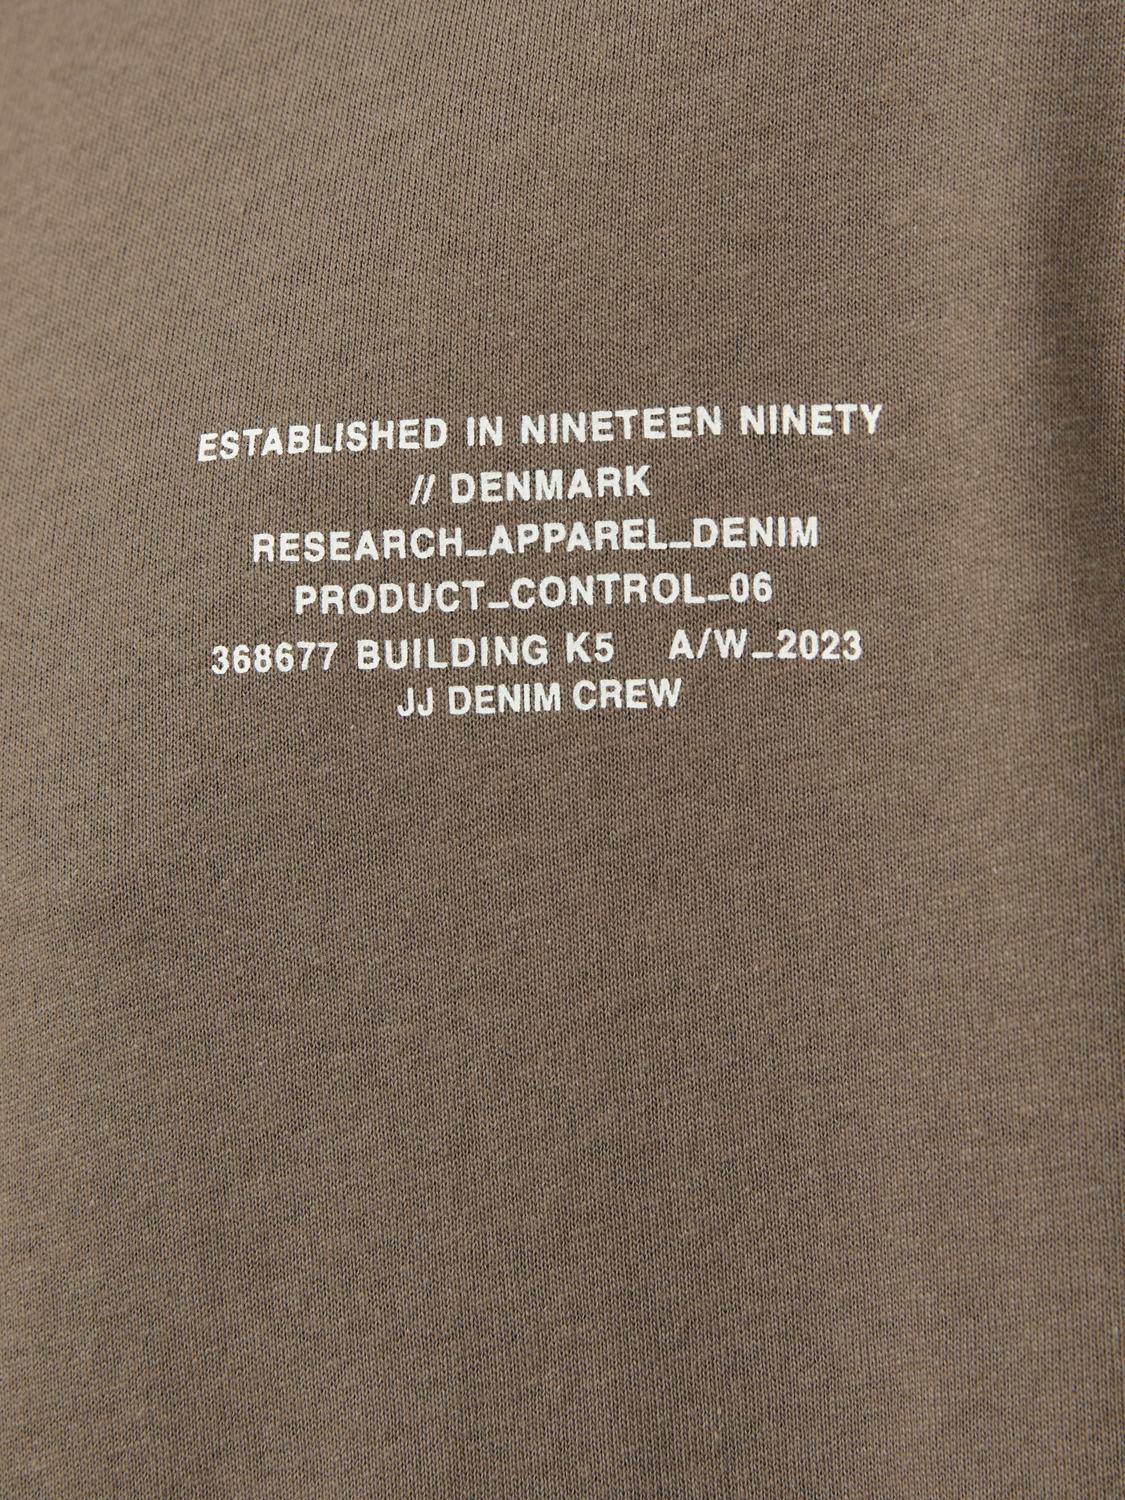 Jack & Jones T-shirt Imprimé Col rond -Bungee Cord - 12250651